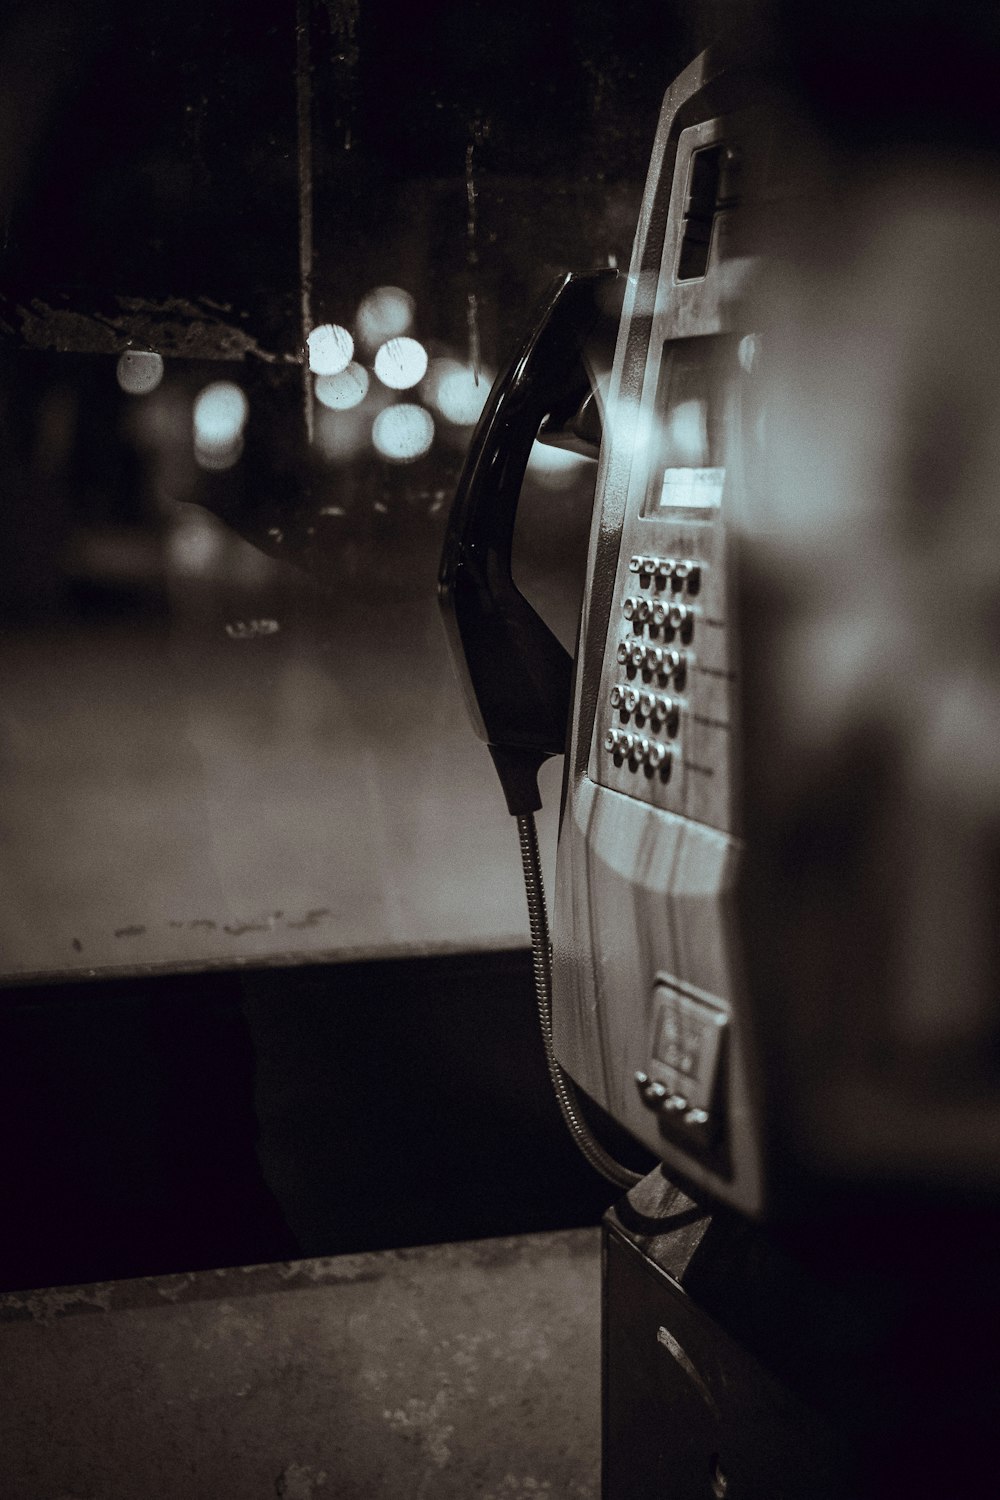 Fotografia da cabine telefônica